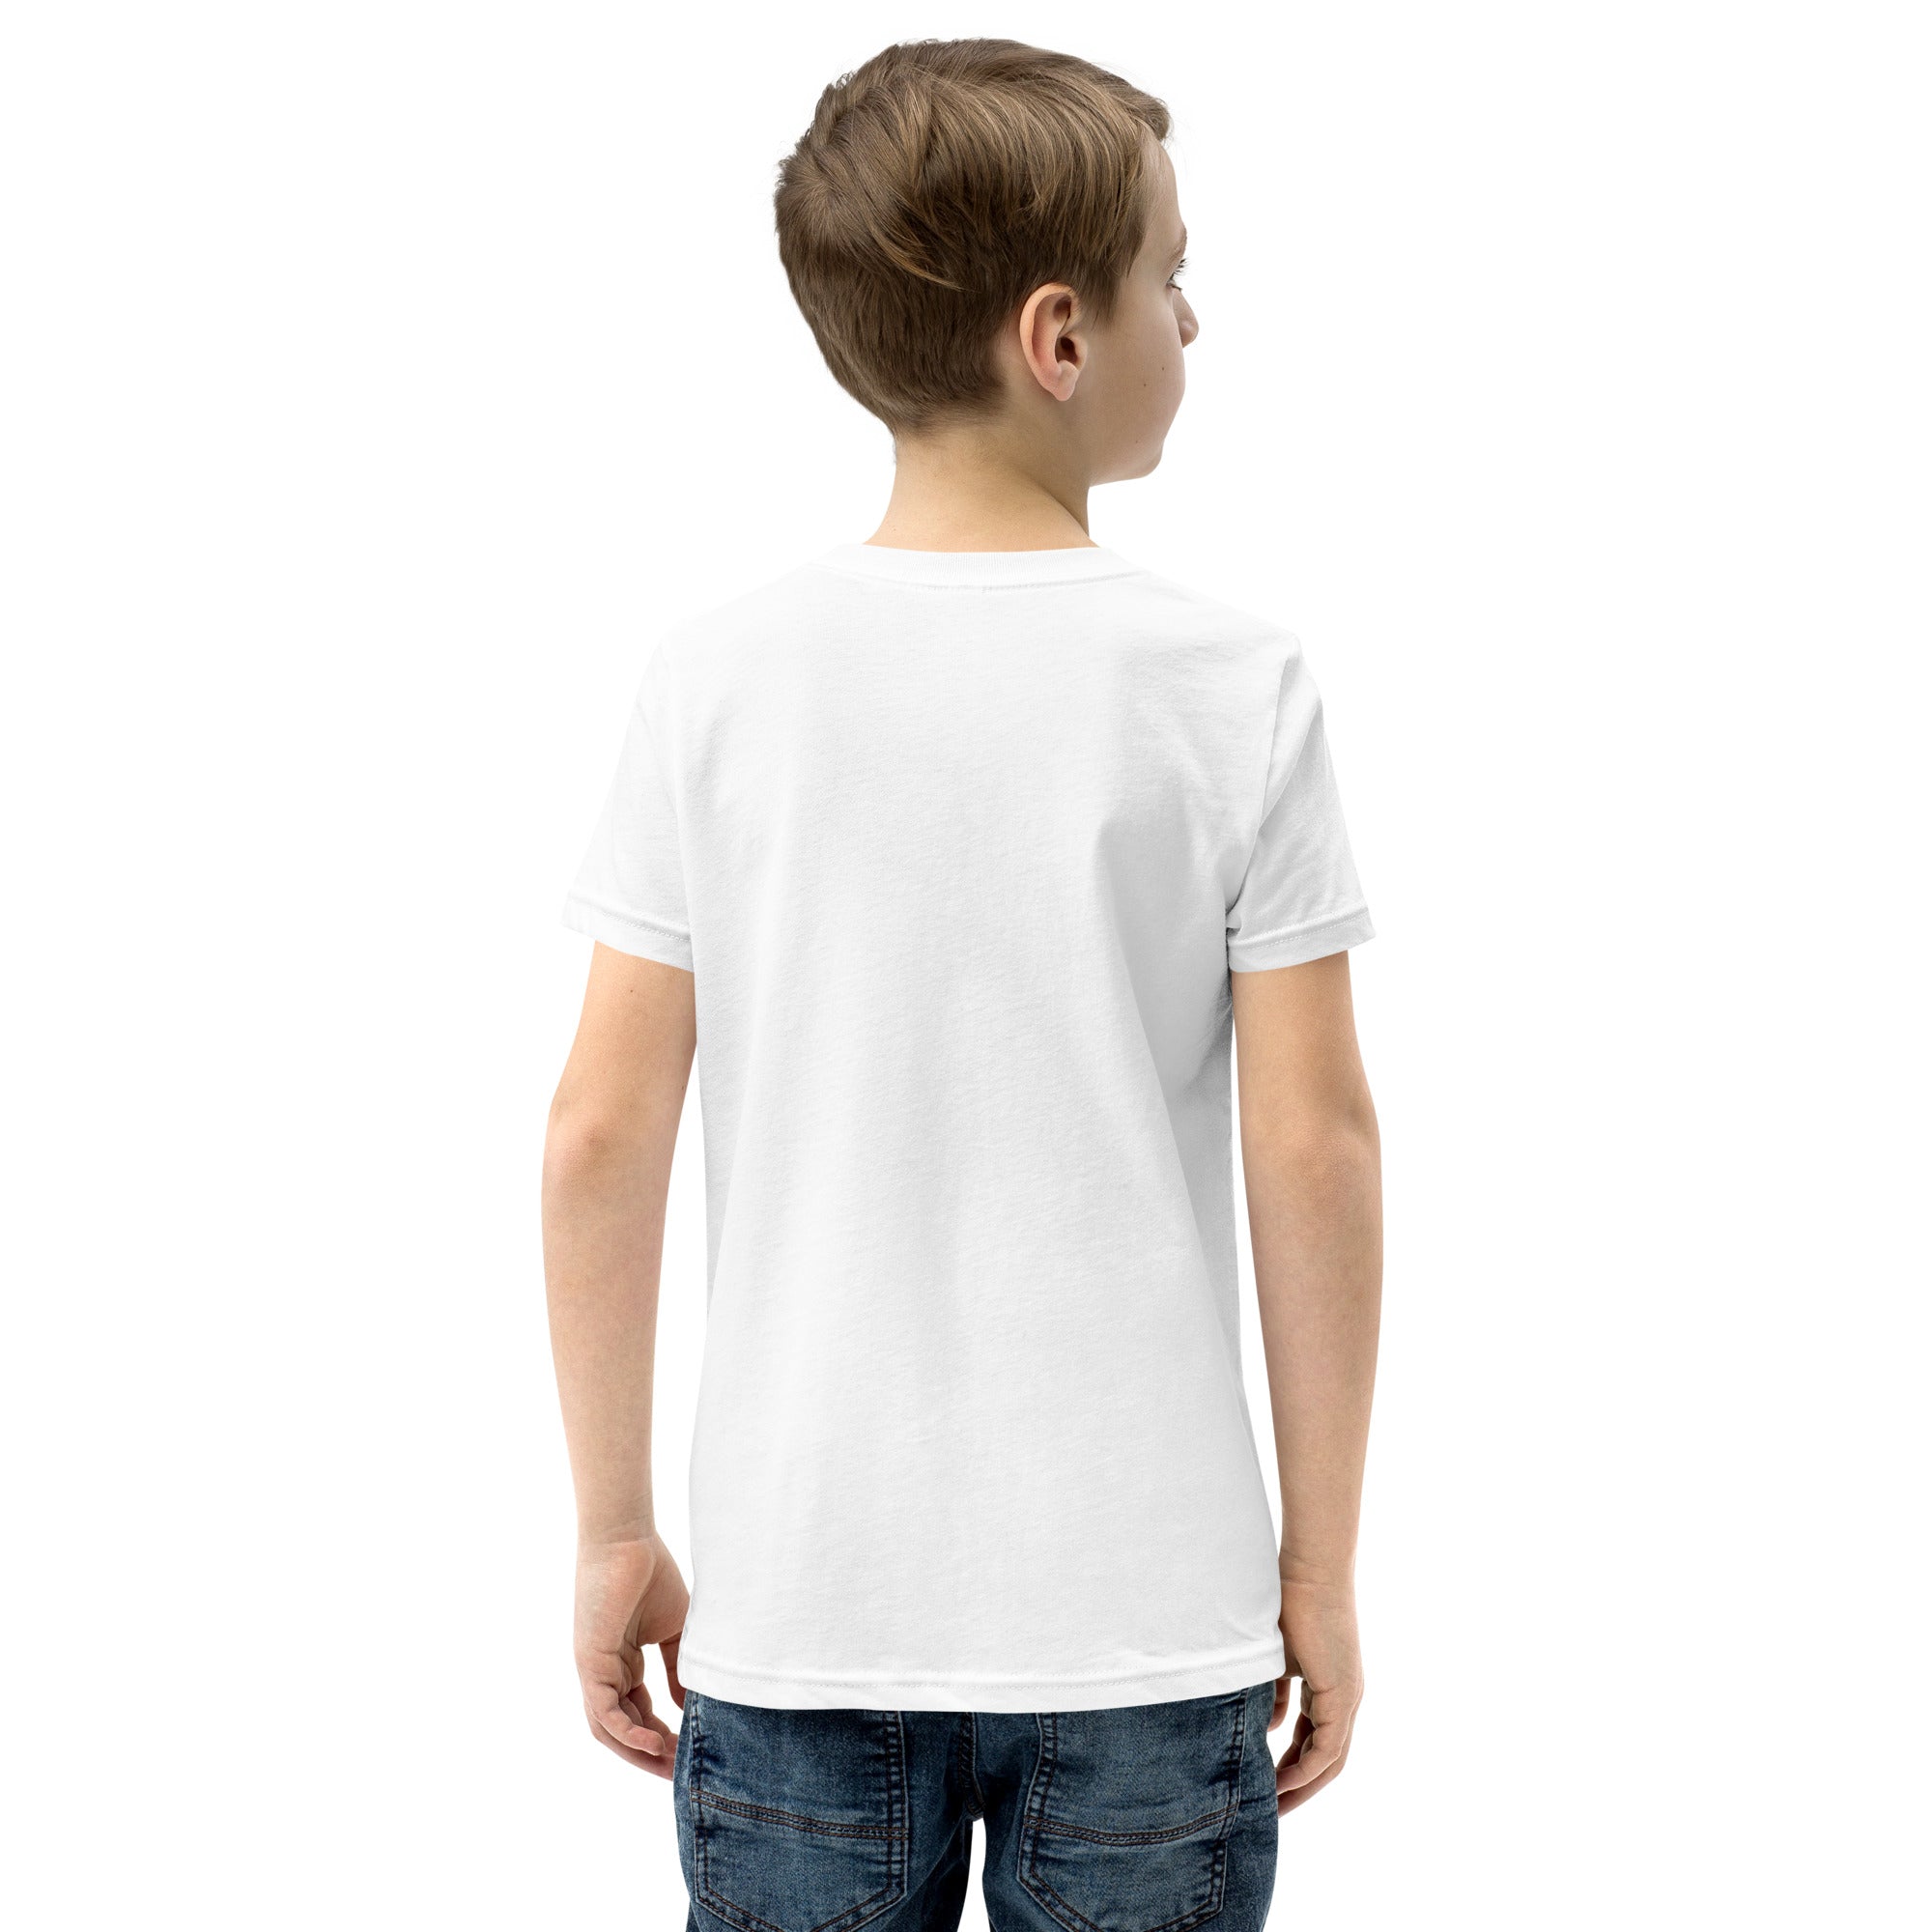 Woodbury Logo R/B - White Youth Short Sleeve T-Shirt